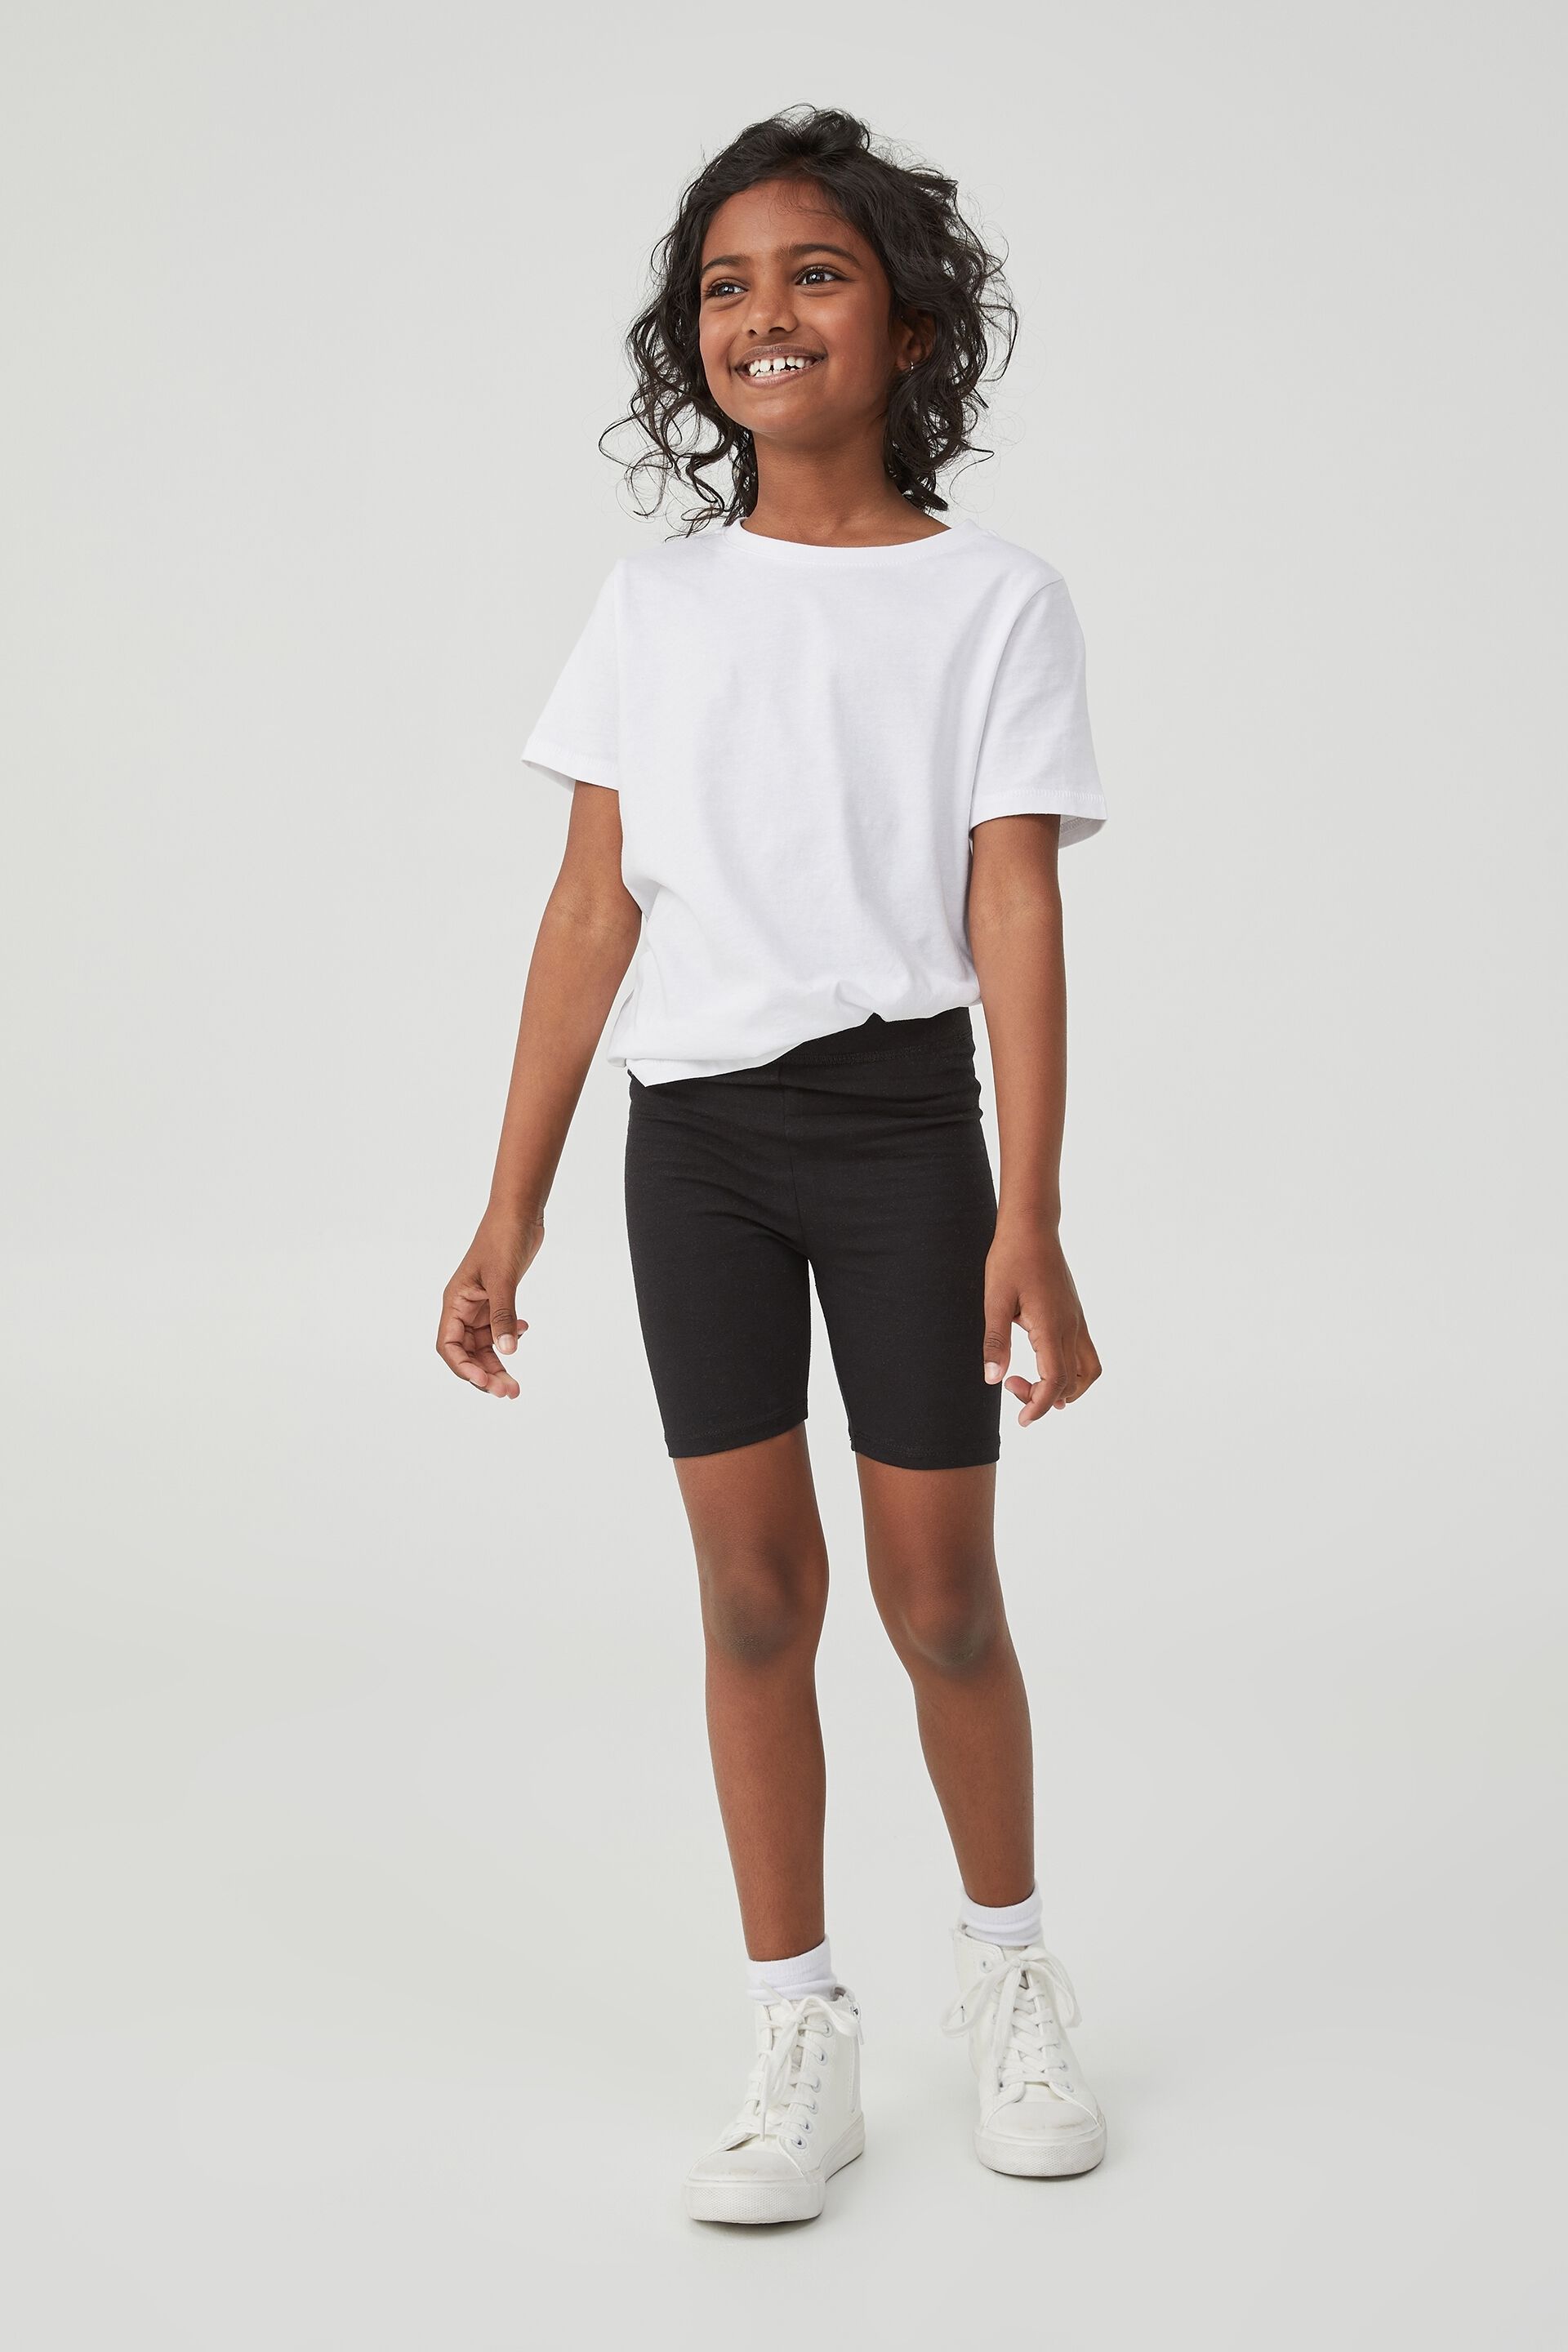 cotton on kids bike shorts